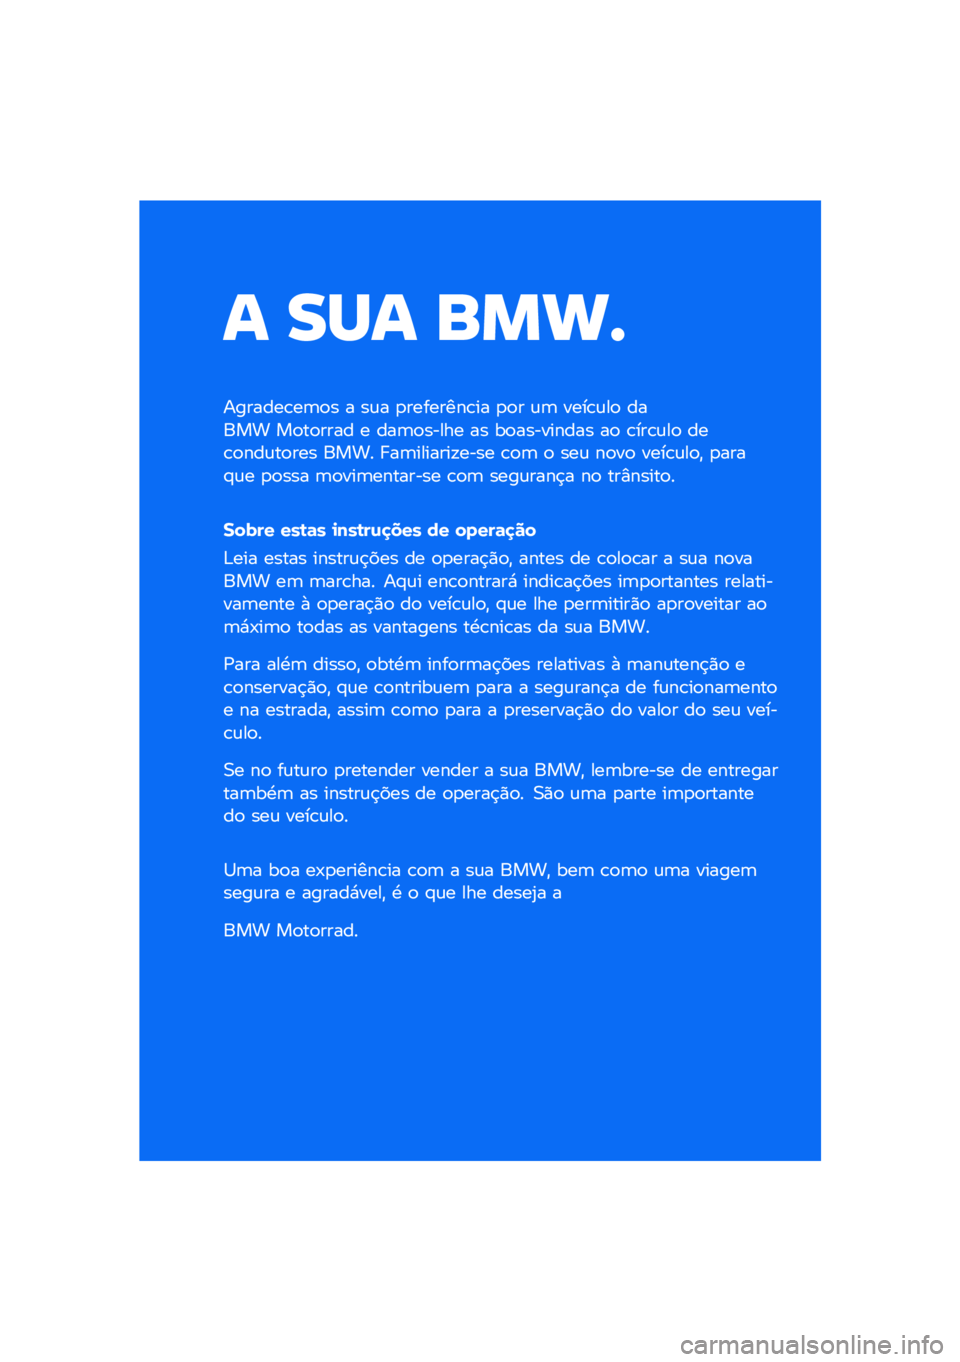 BMW MOTORRAD R 1250 RS 2020  Manual do condutor (in Portuguese) � ��� ����\b
�������\b��	�
� � ��\f� �
��������\b�� �
�
� �\f�	 ����\b�\f��
 ����� ��
��
���� � ���	�
����� �� ��
��������� ��
 �\b���